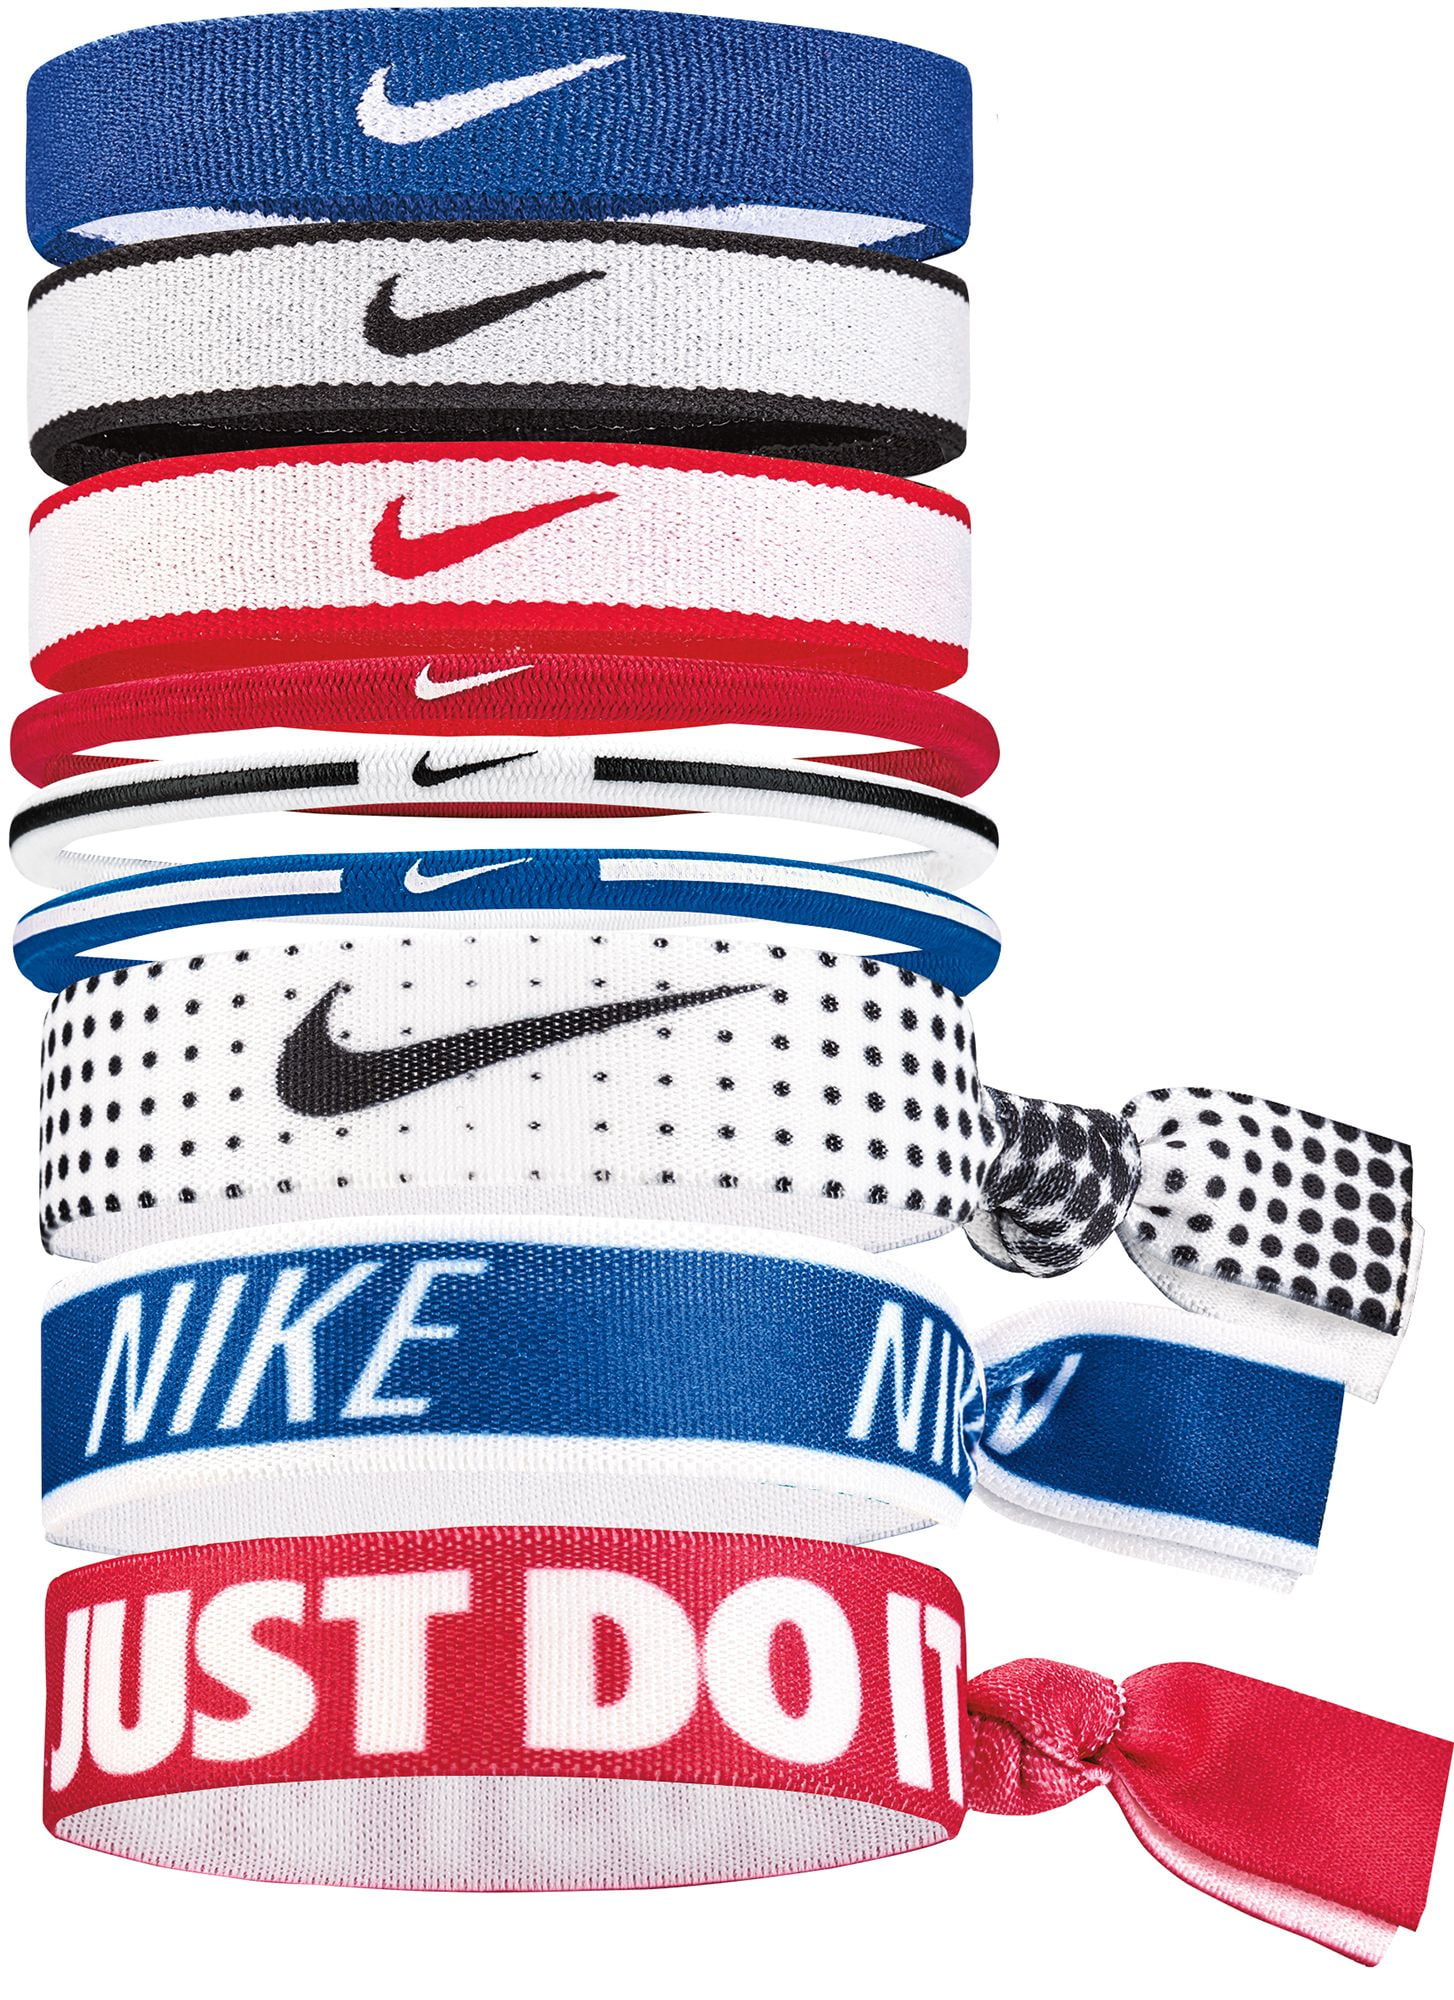 Nike Mixed Ponytail Holder 9 pack 